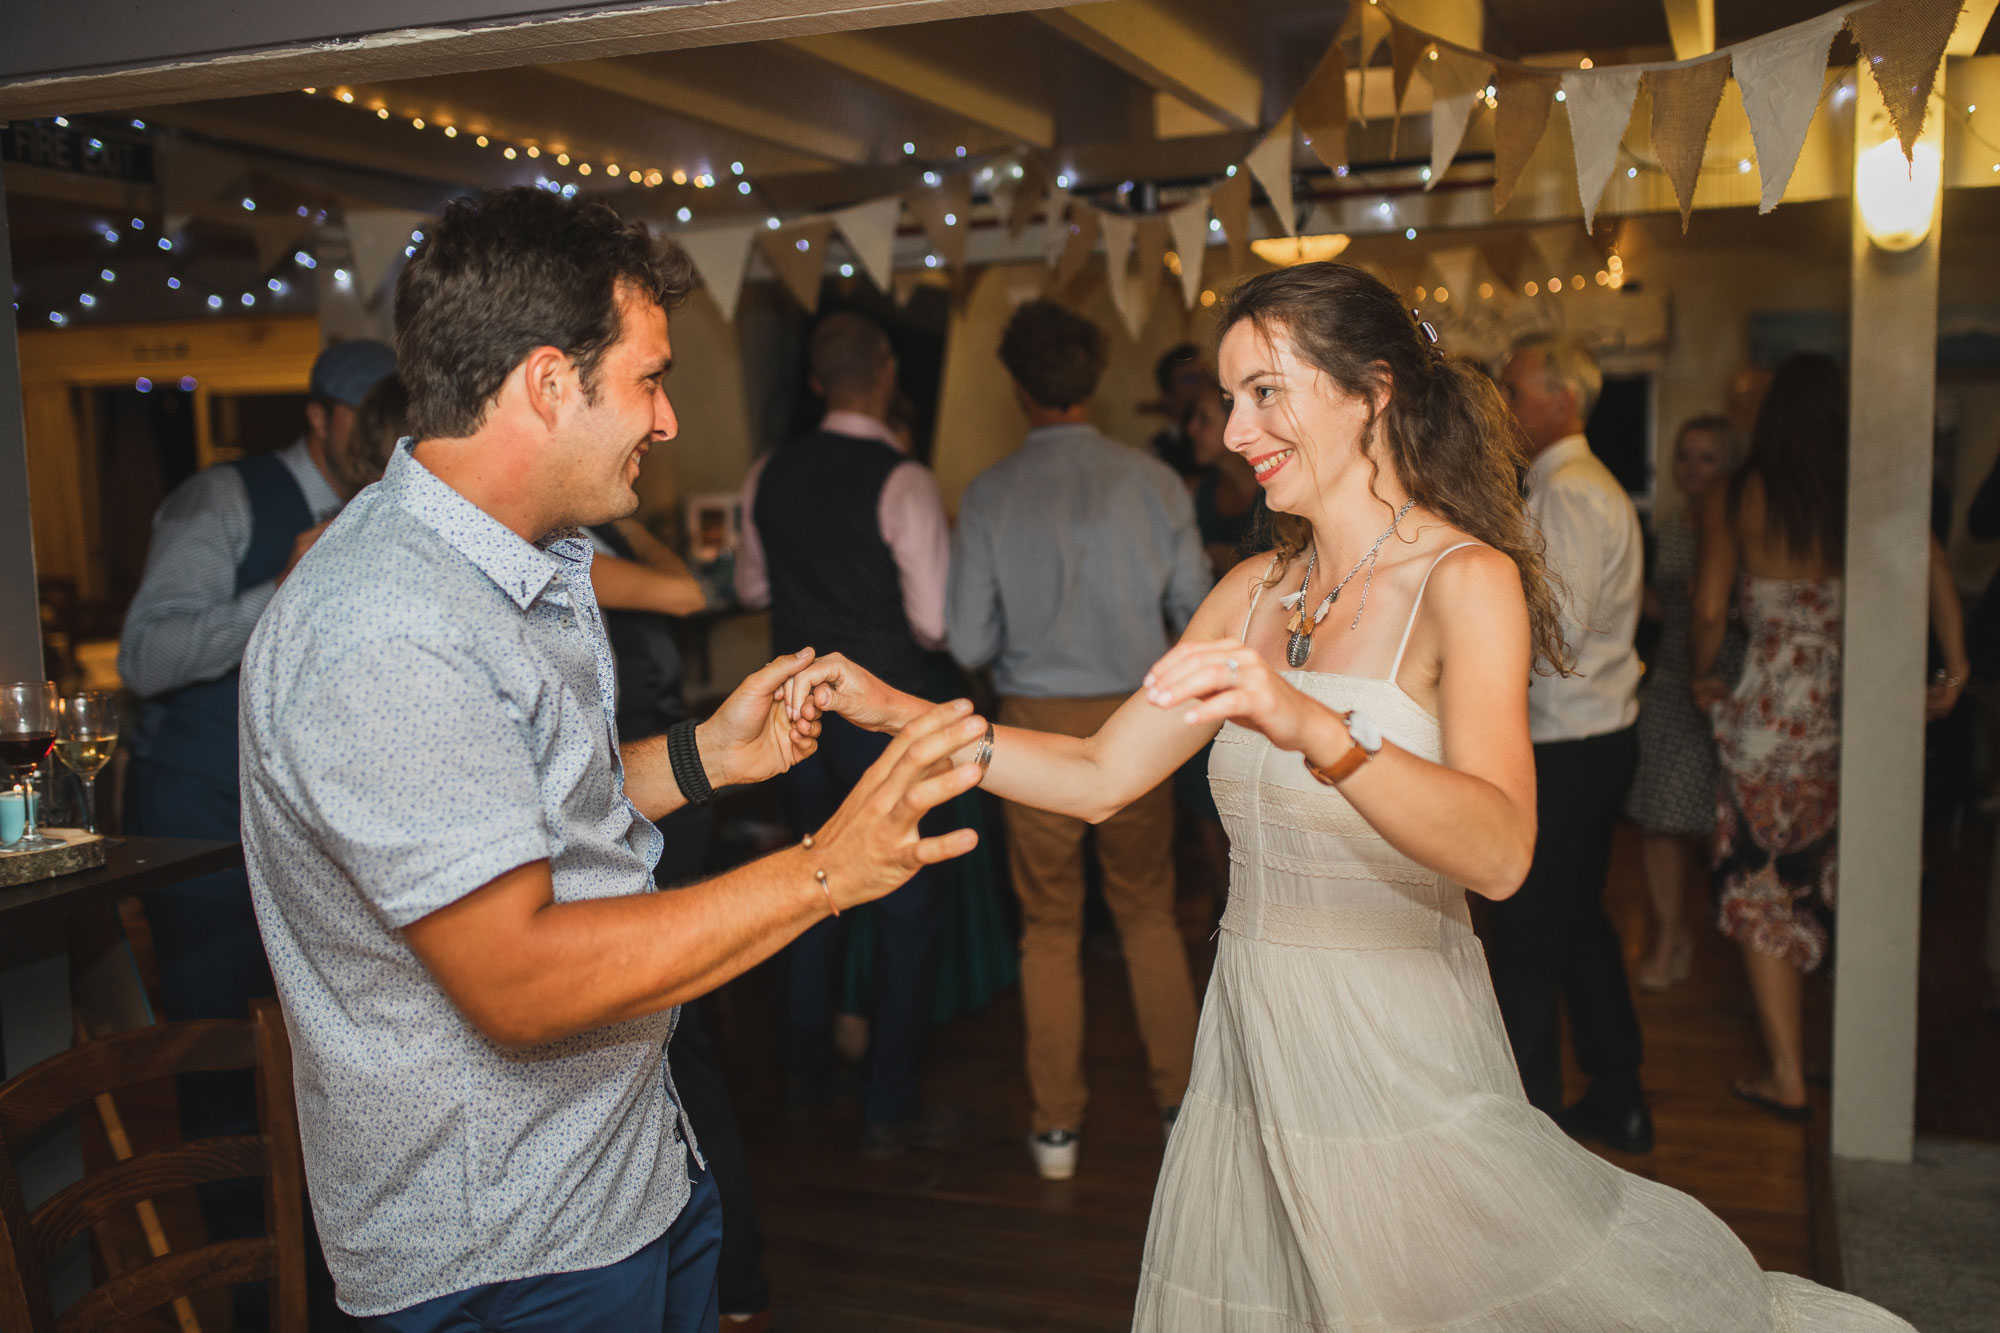 christchurch wedding guests at reception dancing